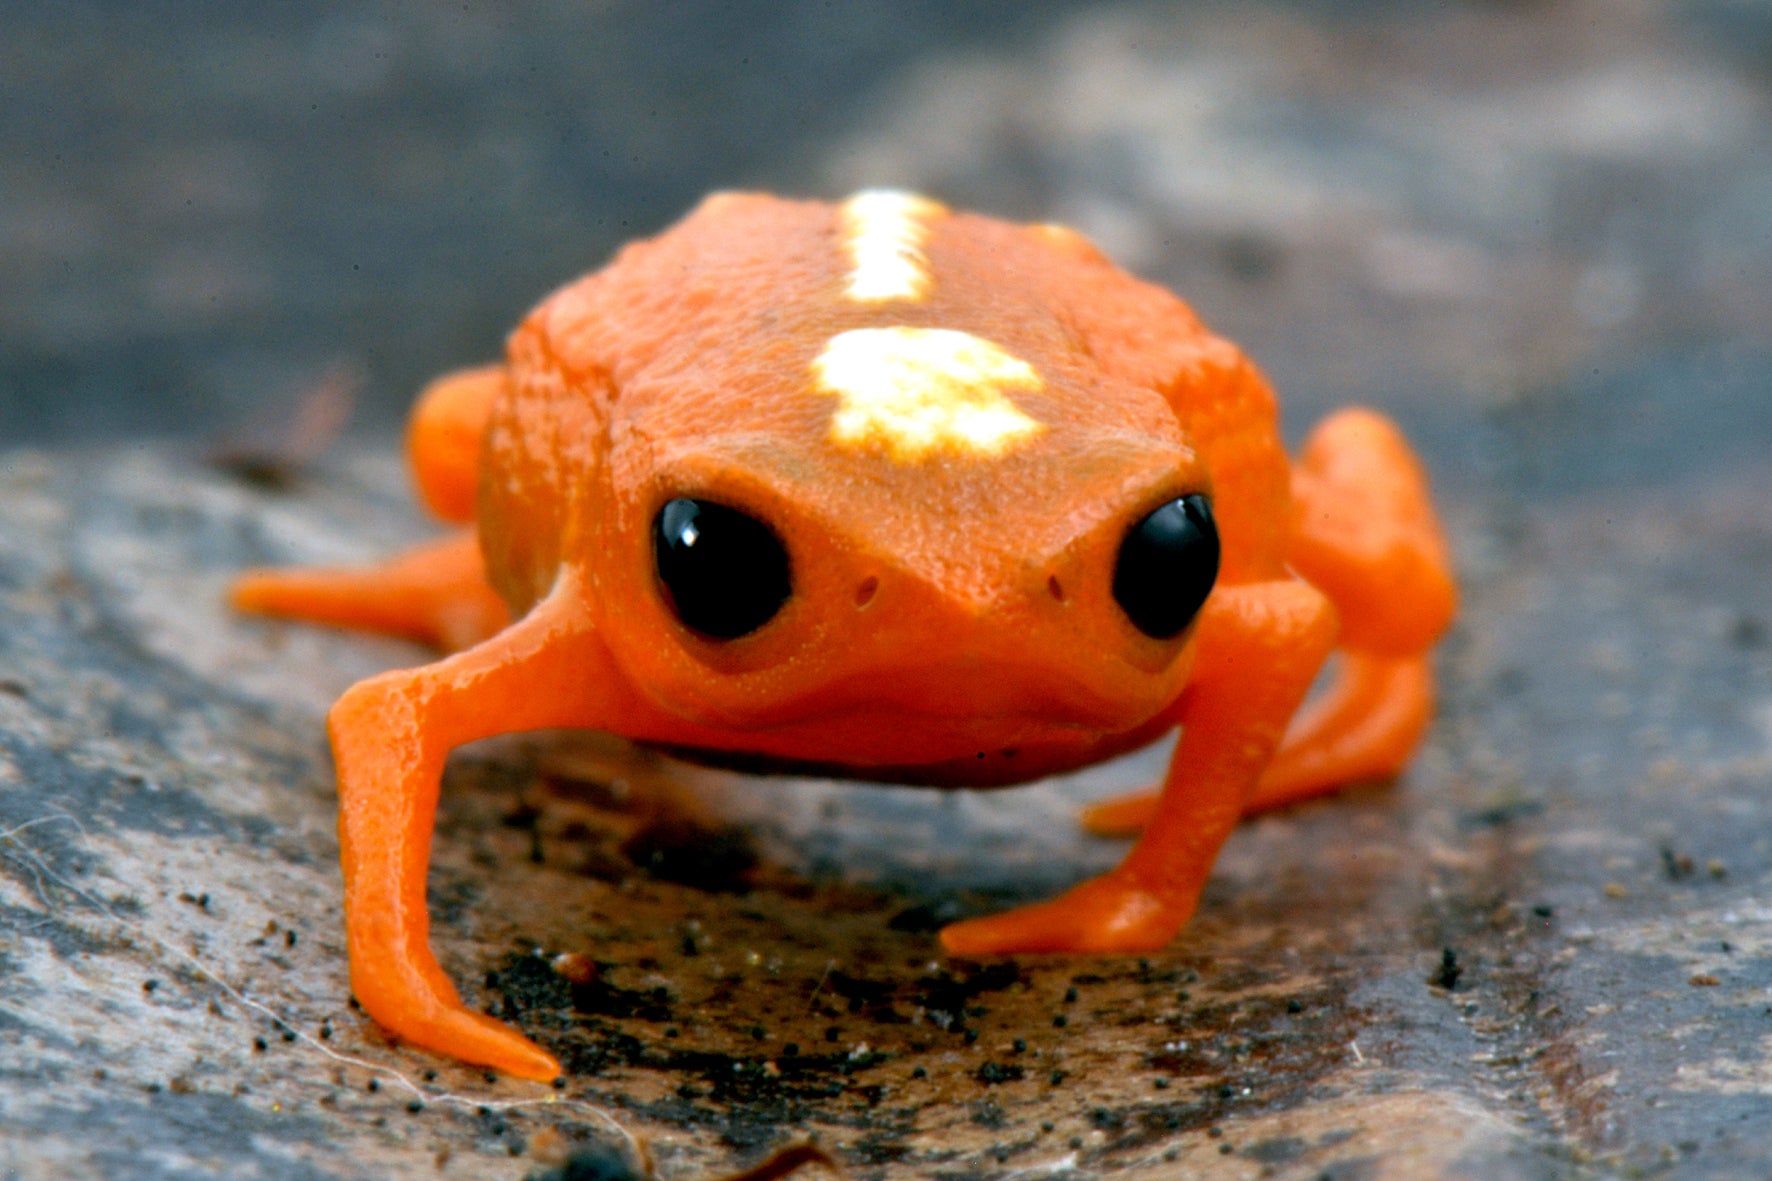 Brachycephalus mirissimus, a miniaturized Brazilian frog. (Photo: Luiz F. Ribeiro)